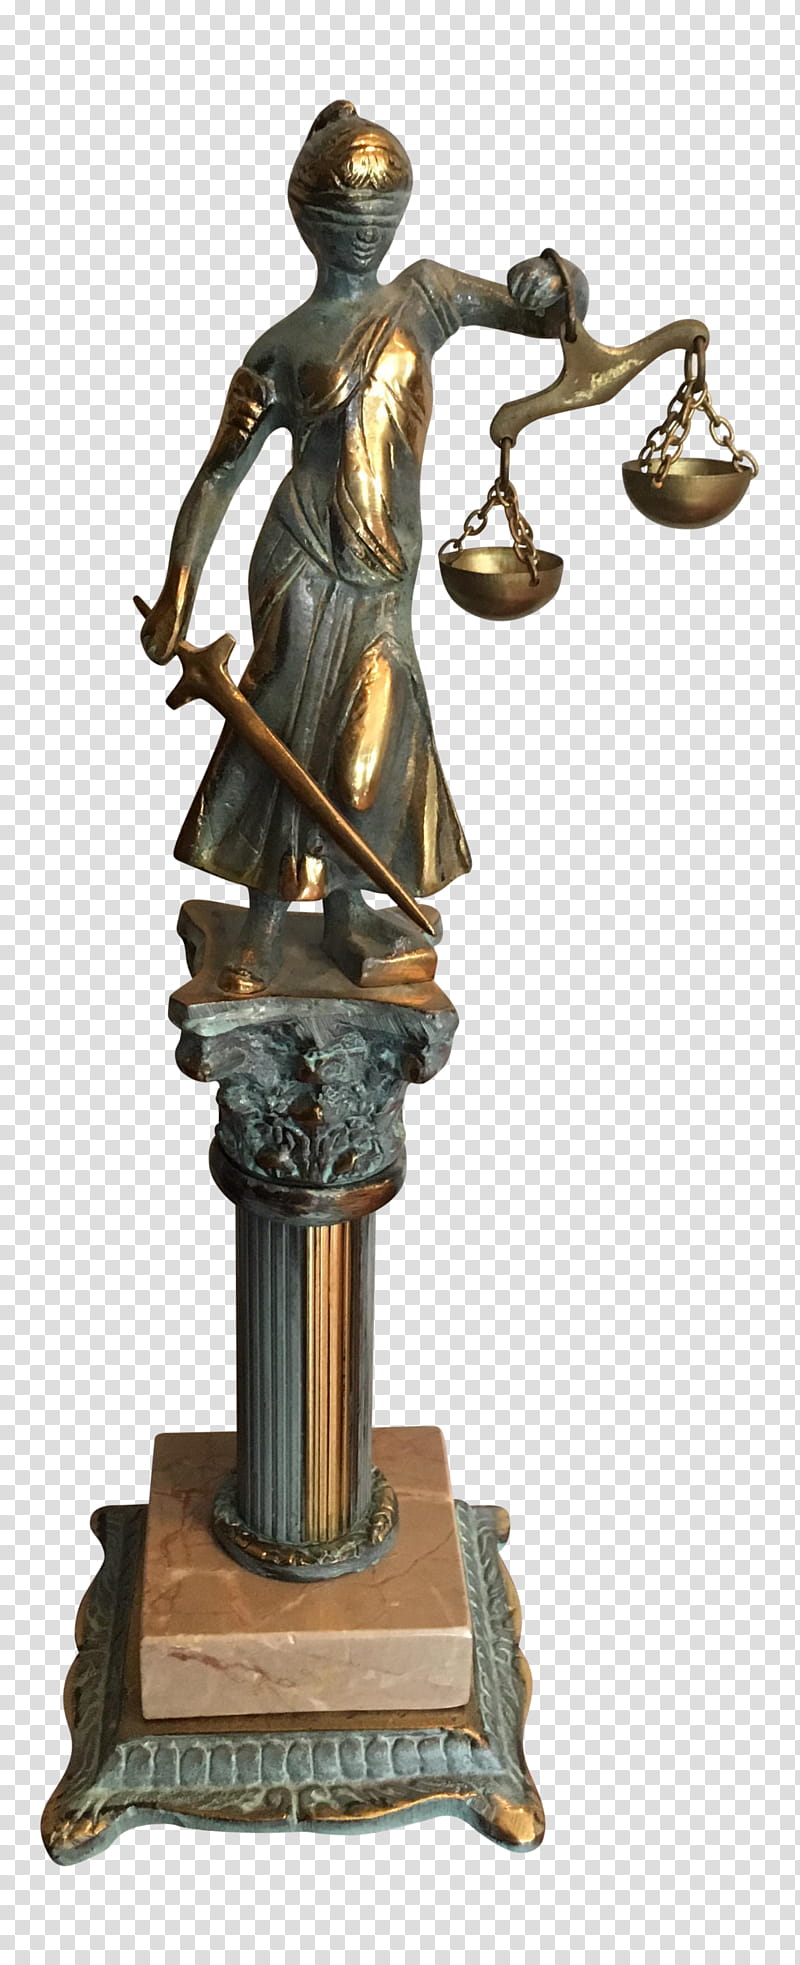 Modern, Bronze Sculpture, Statue, Classical Sculpture, Ornament, Brass, Lady Justice, Figurine transparent background PNG clipart